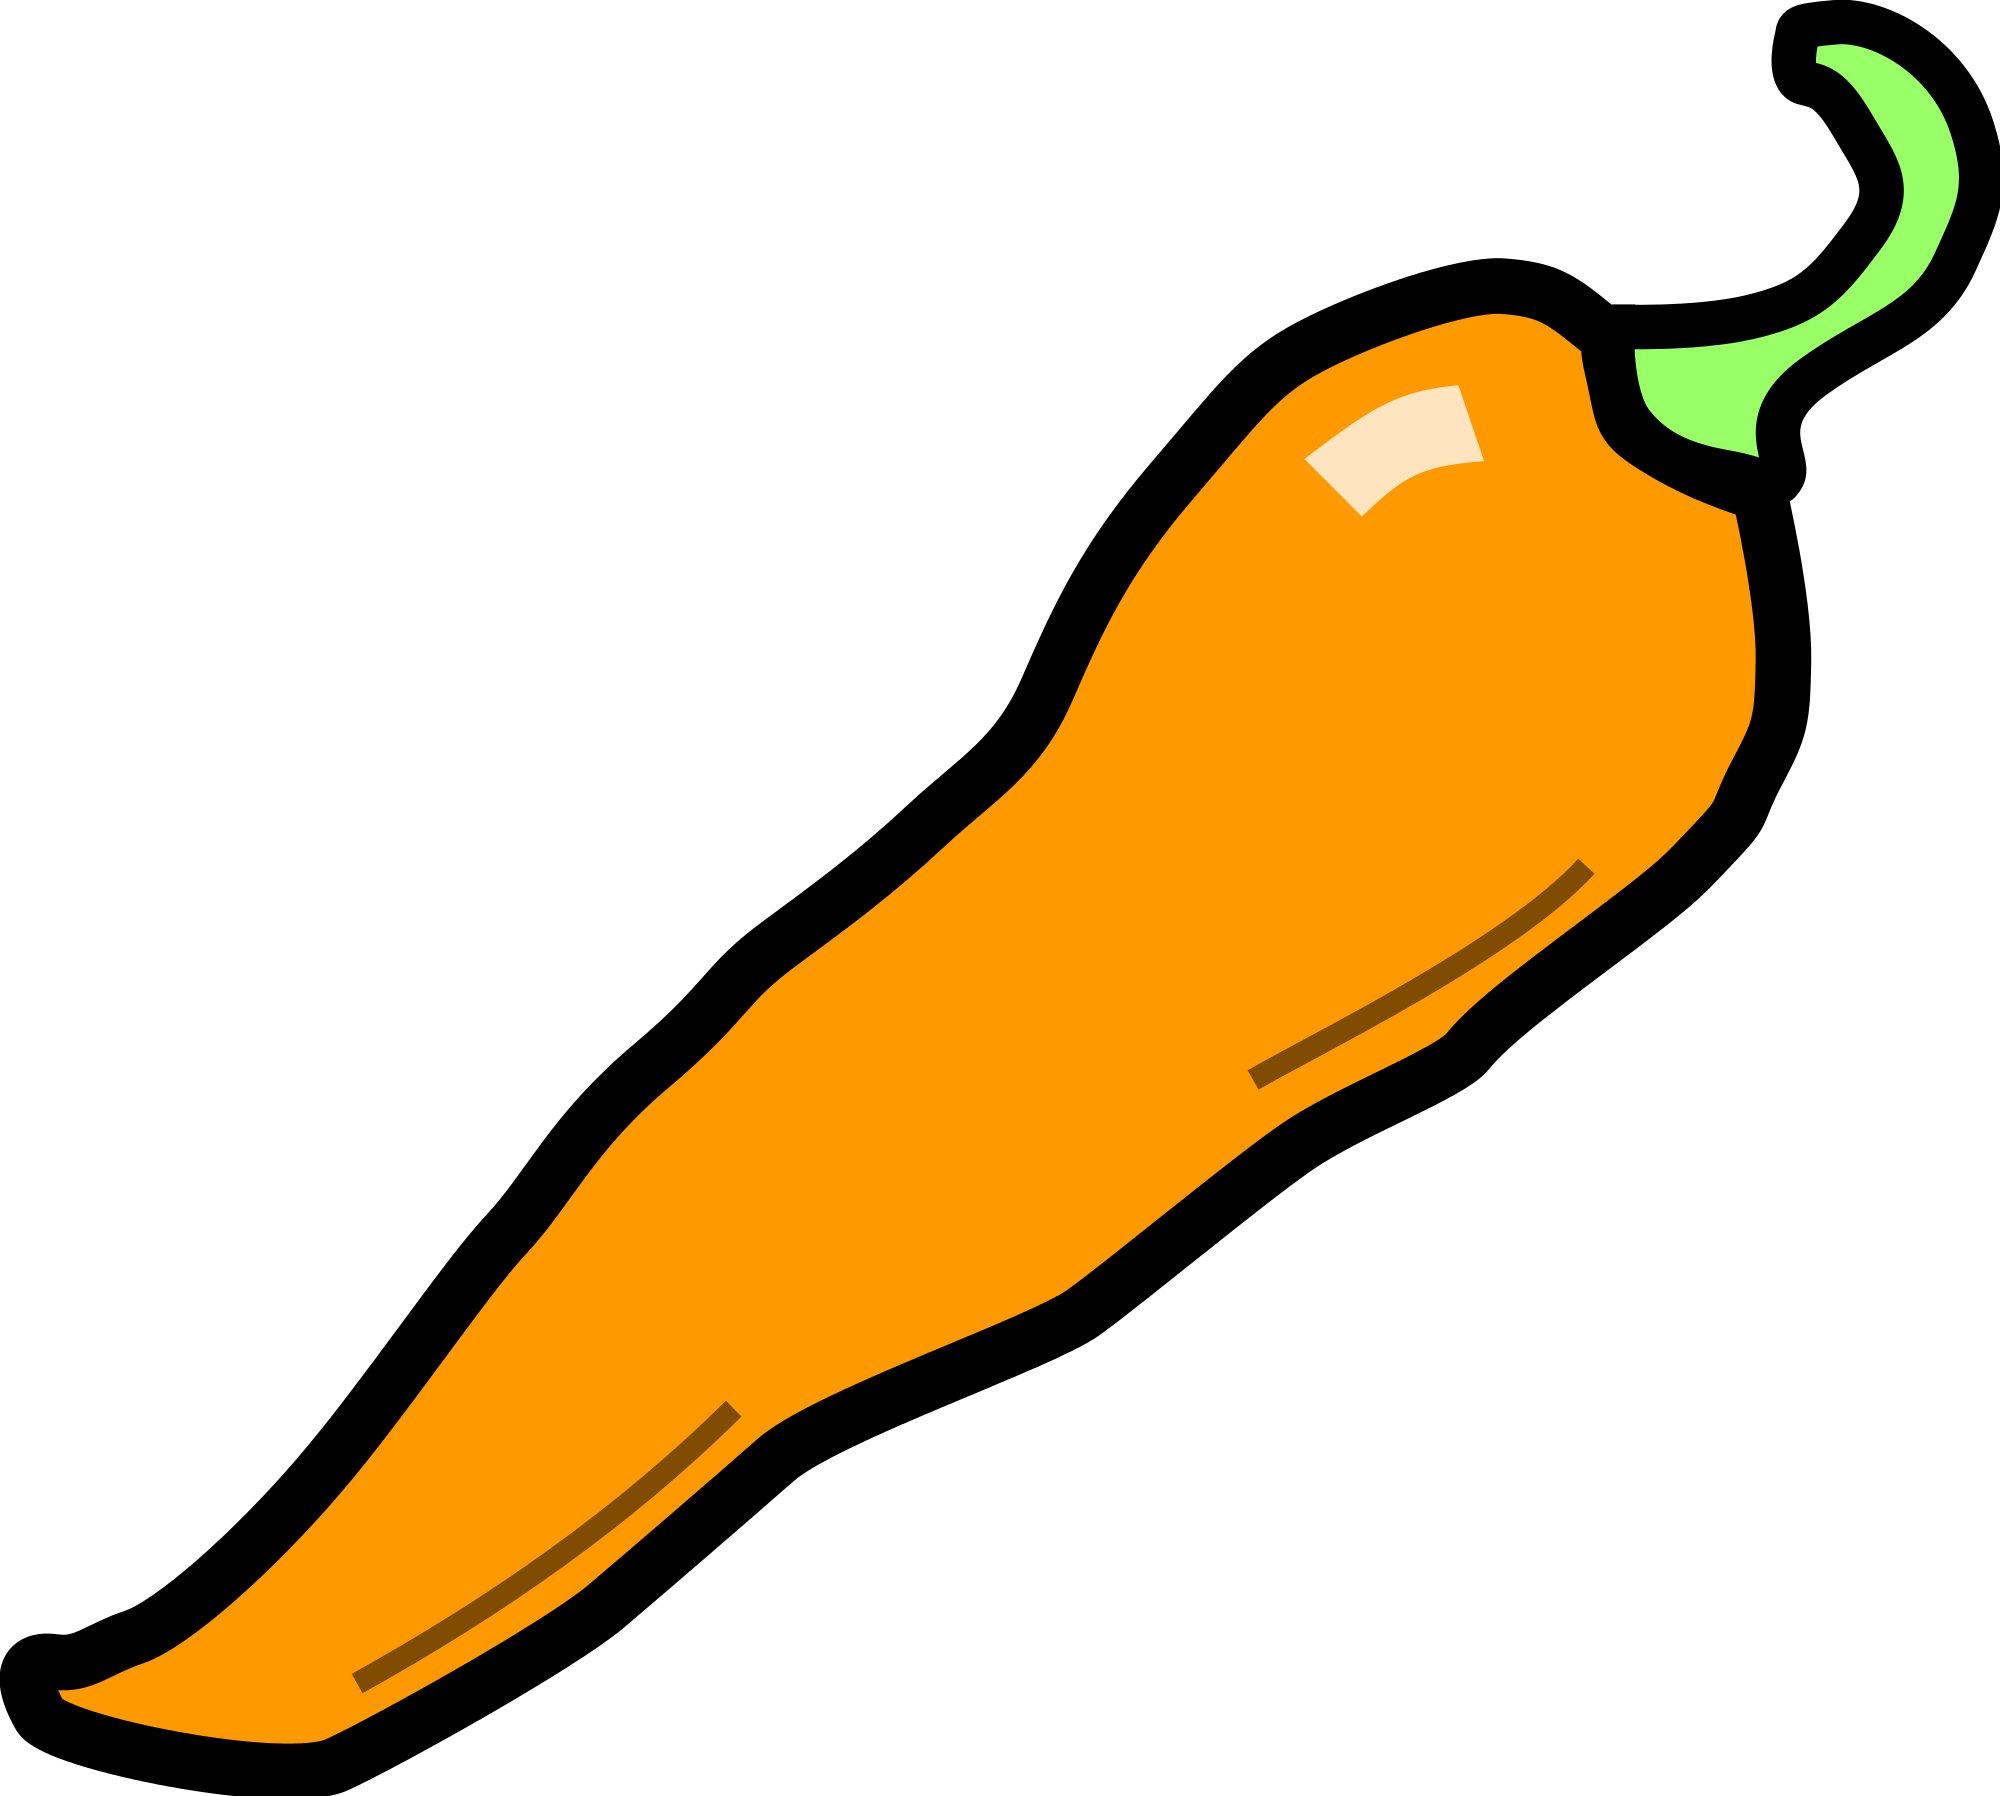 Chilli Pepper - Orange Chili Pepper Clipart (2000x1796)